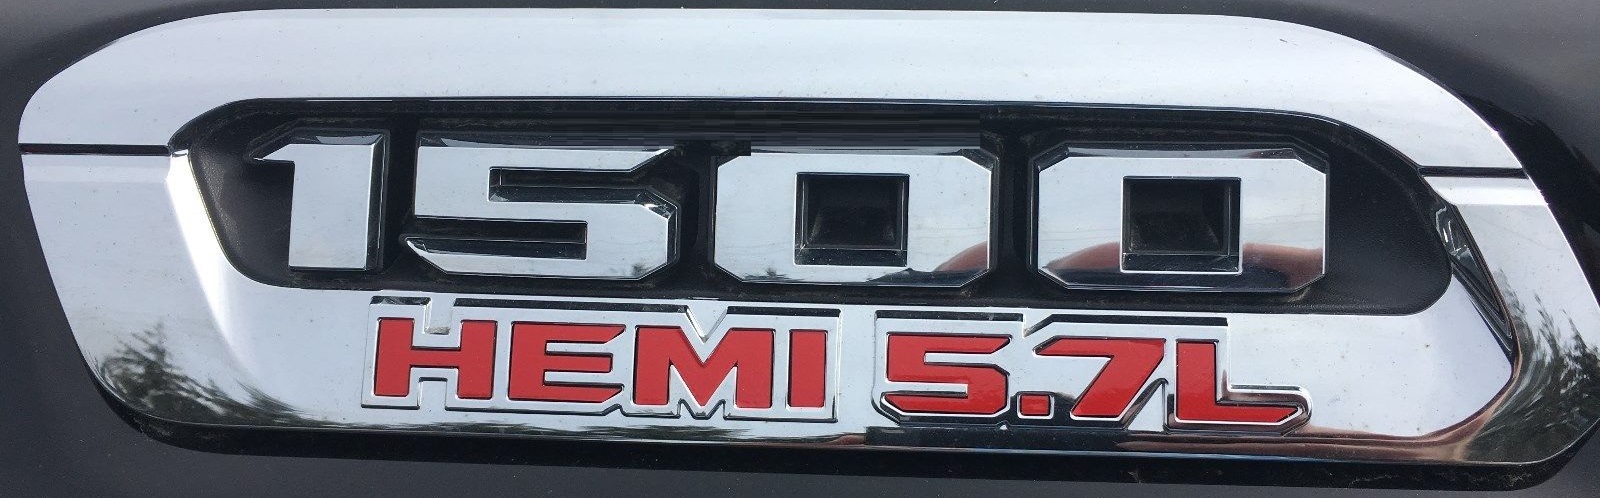 "HEMI 5.7L" Emblem Decal Overlay Kit 2019 Ram Truck